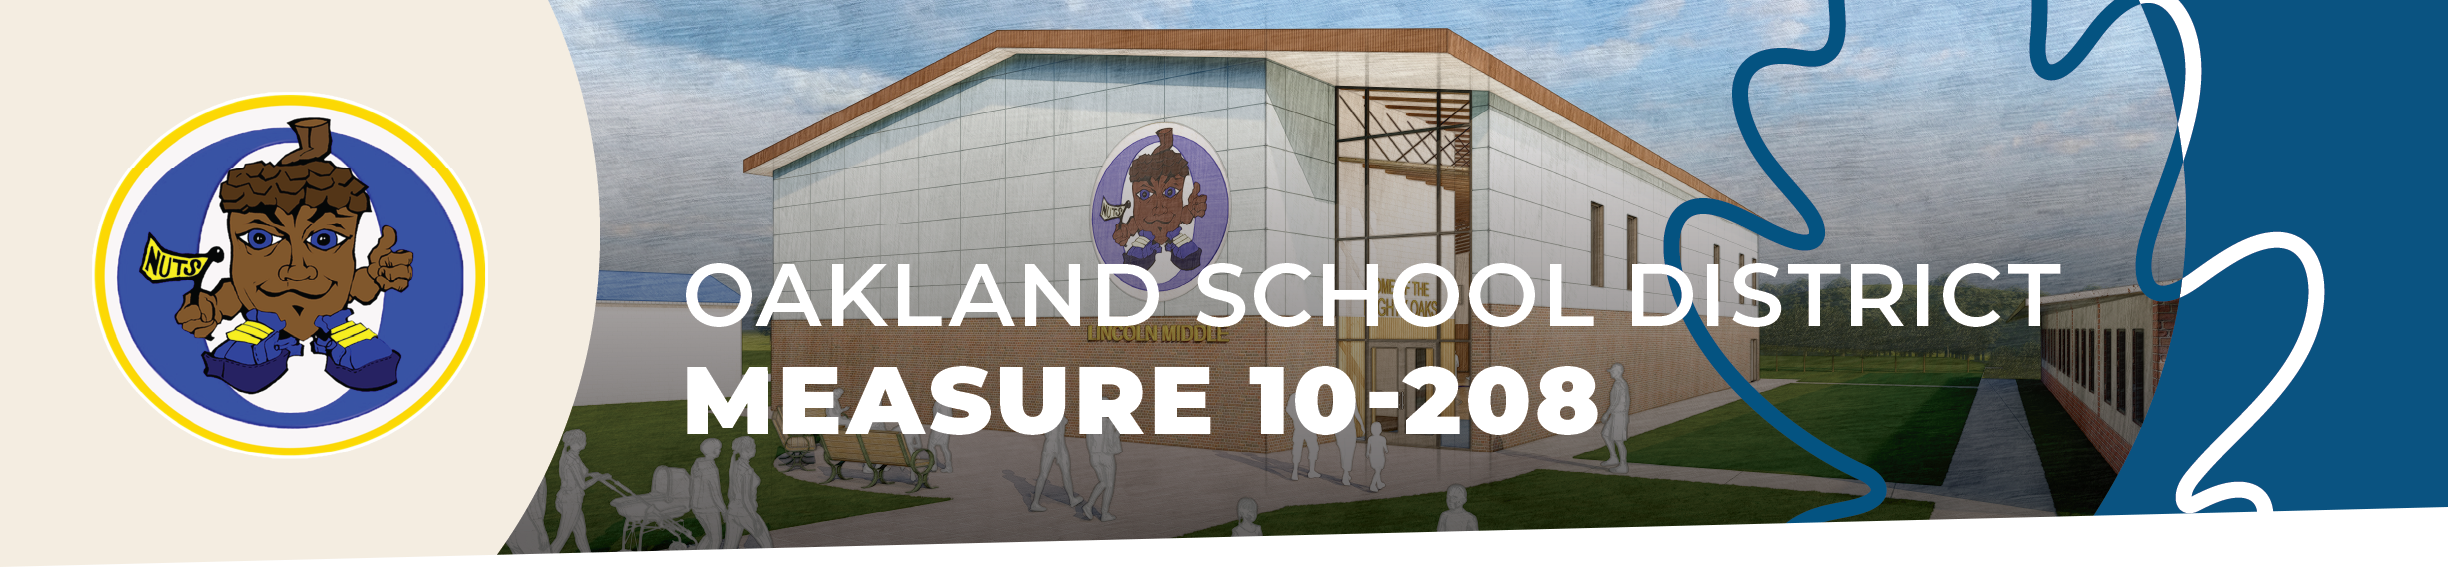 Oakland School District Proposed Measure 10-208